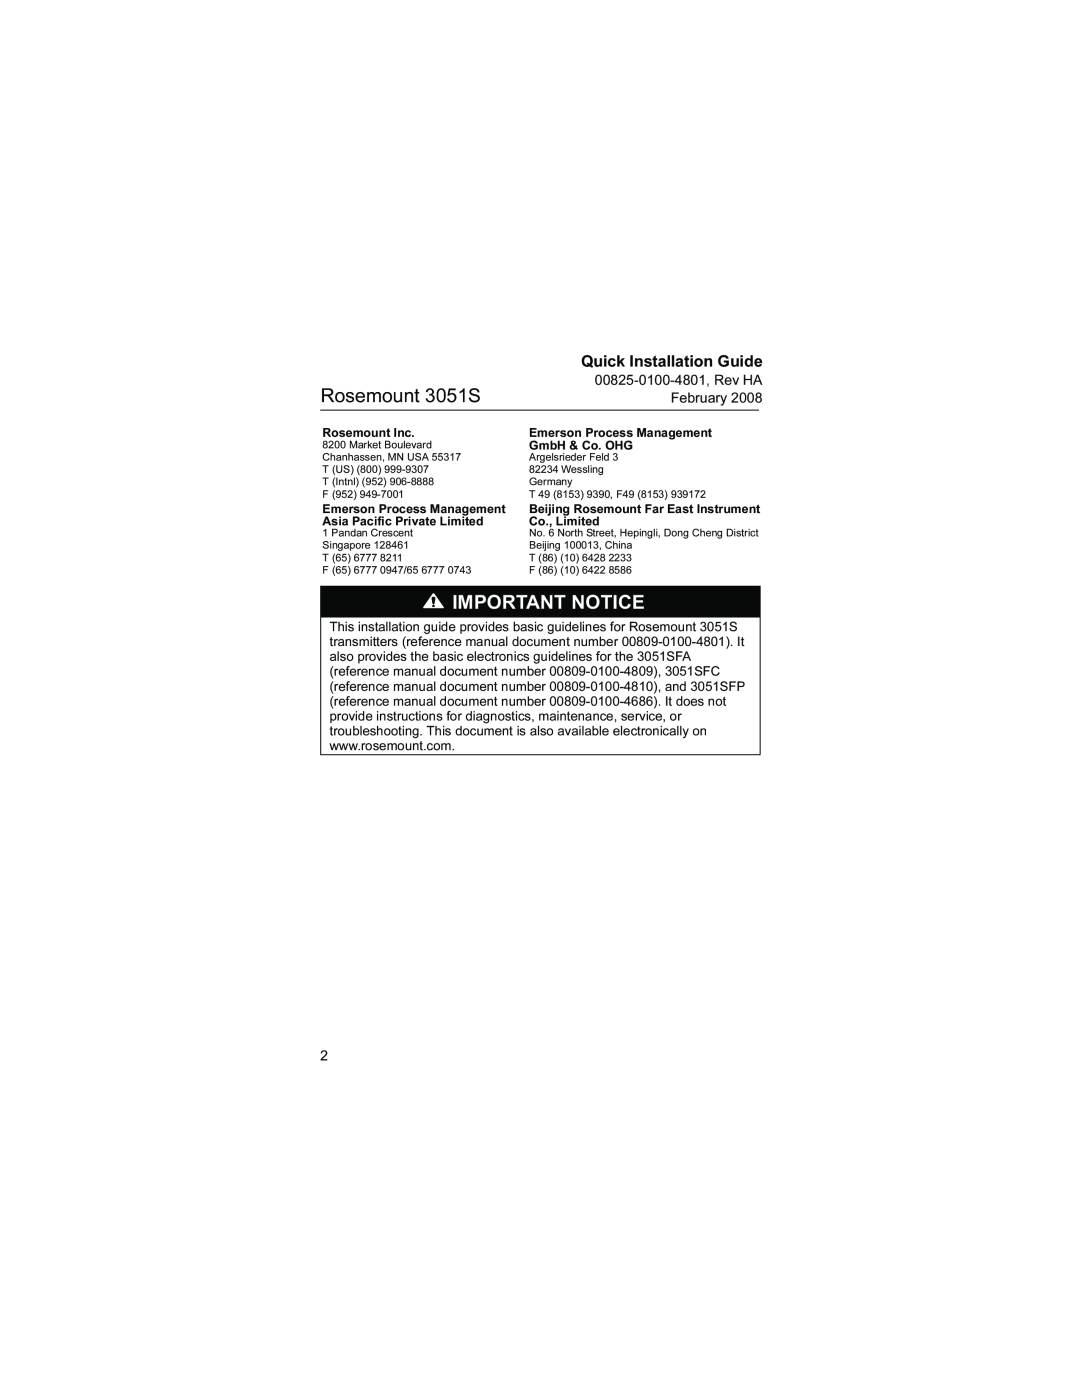 Emerson manual Rosemount 3051S, Important Notice, Quick Installation Guide, 00825-0100-4801, Rev HA February 